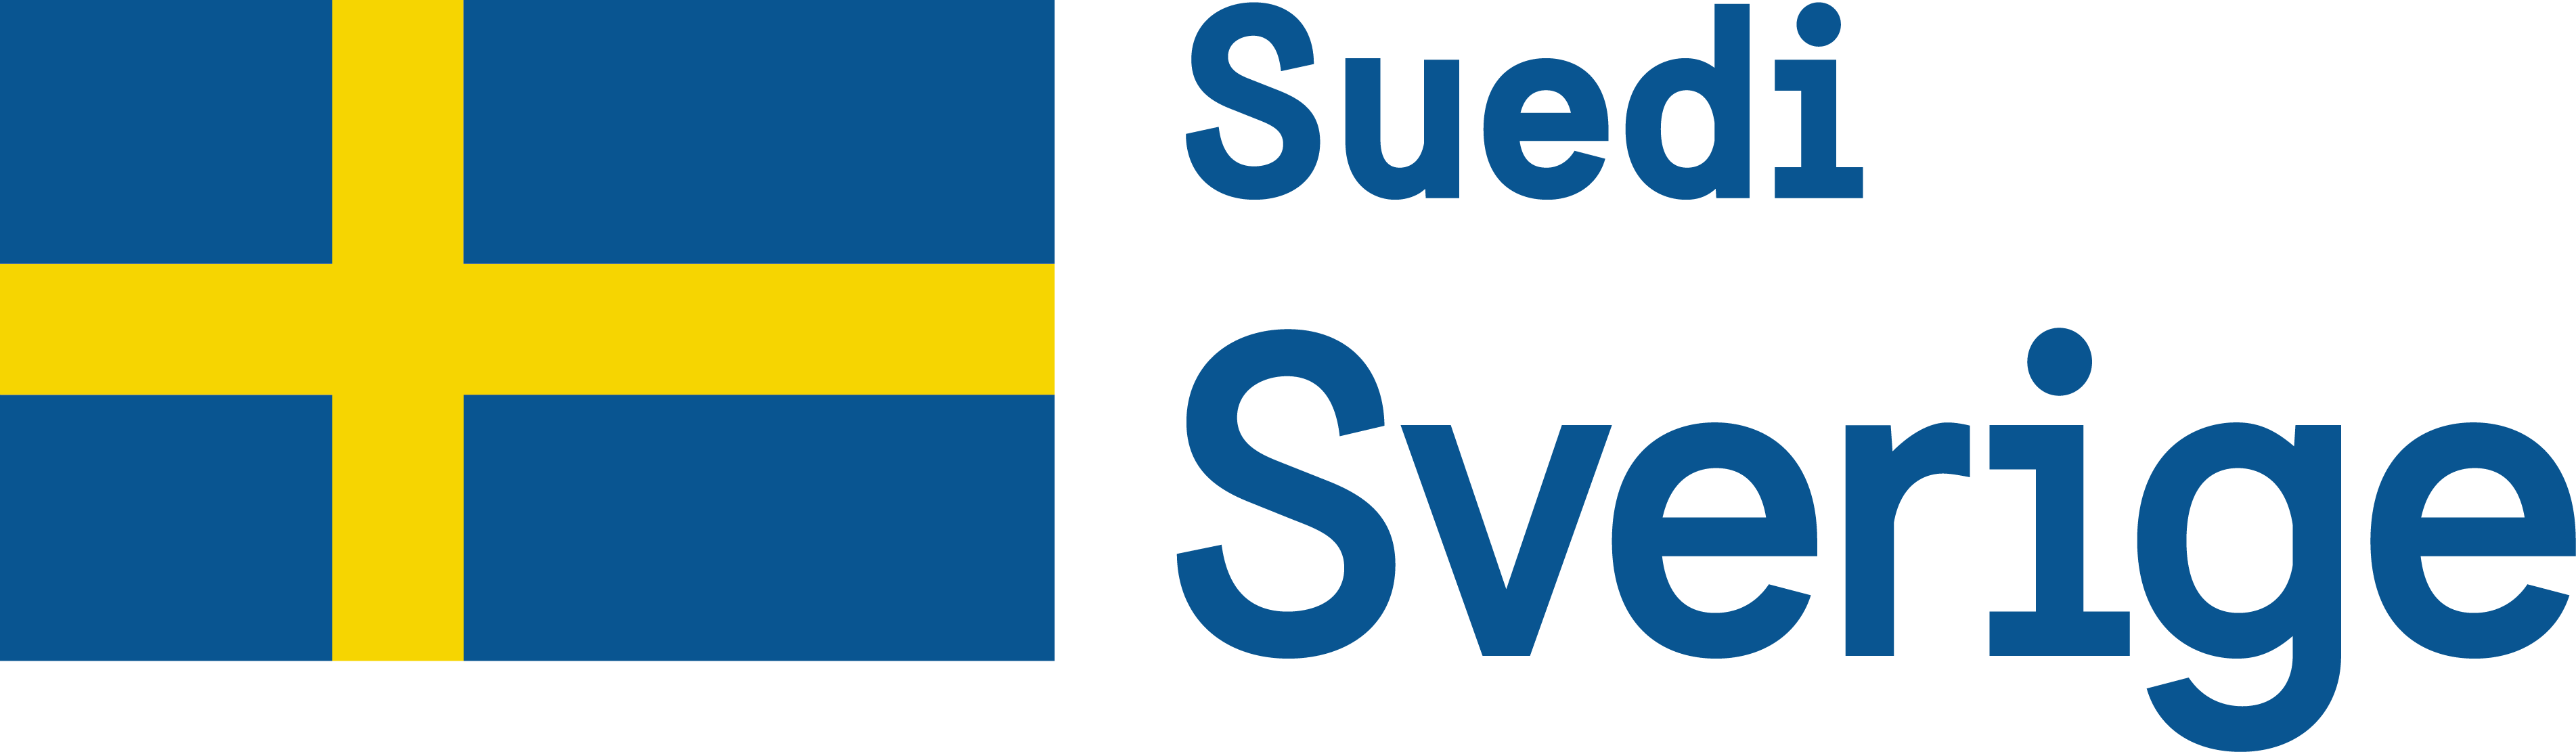 logo_amb_suedeze.png